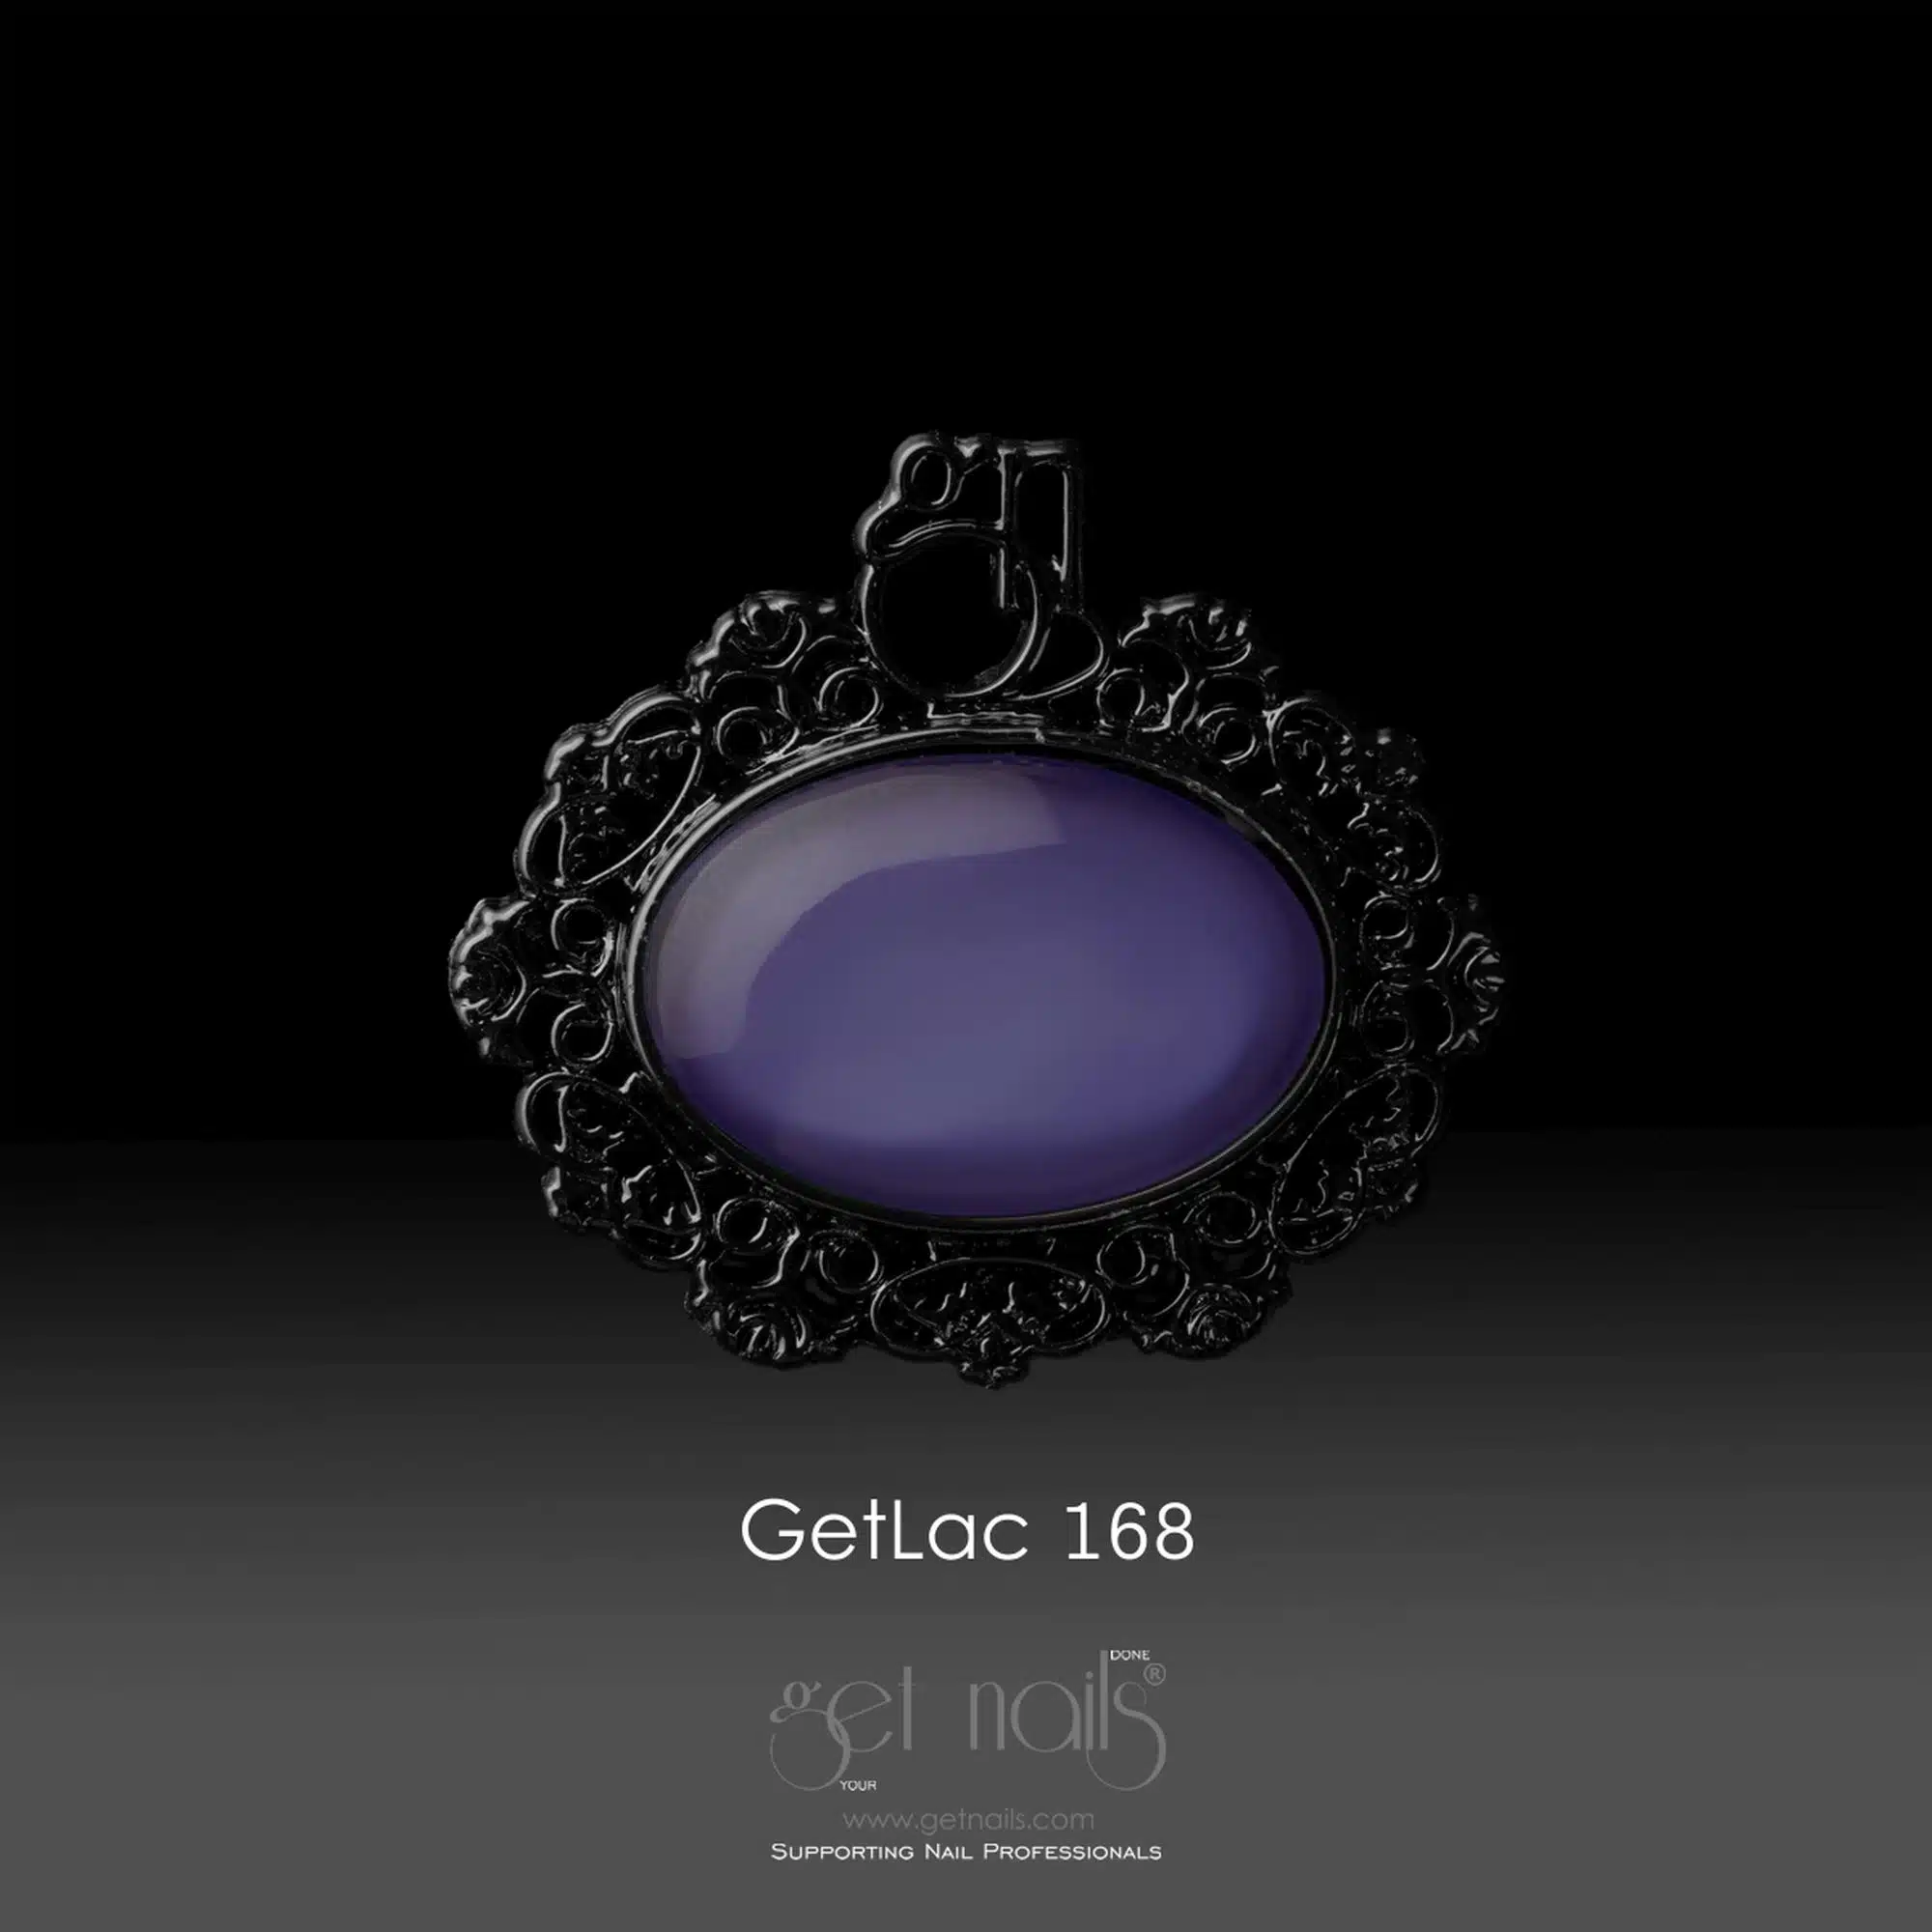 Ottieni Nails Austria - GetLac 168 15g